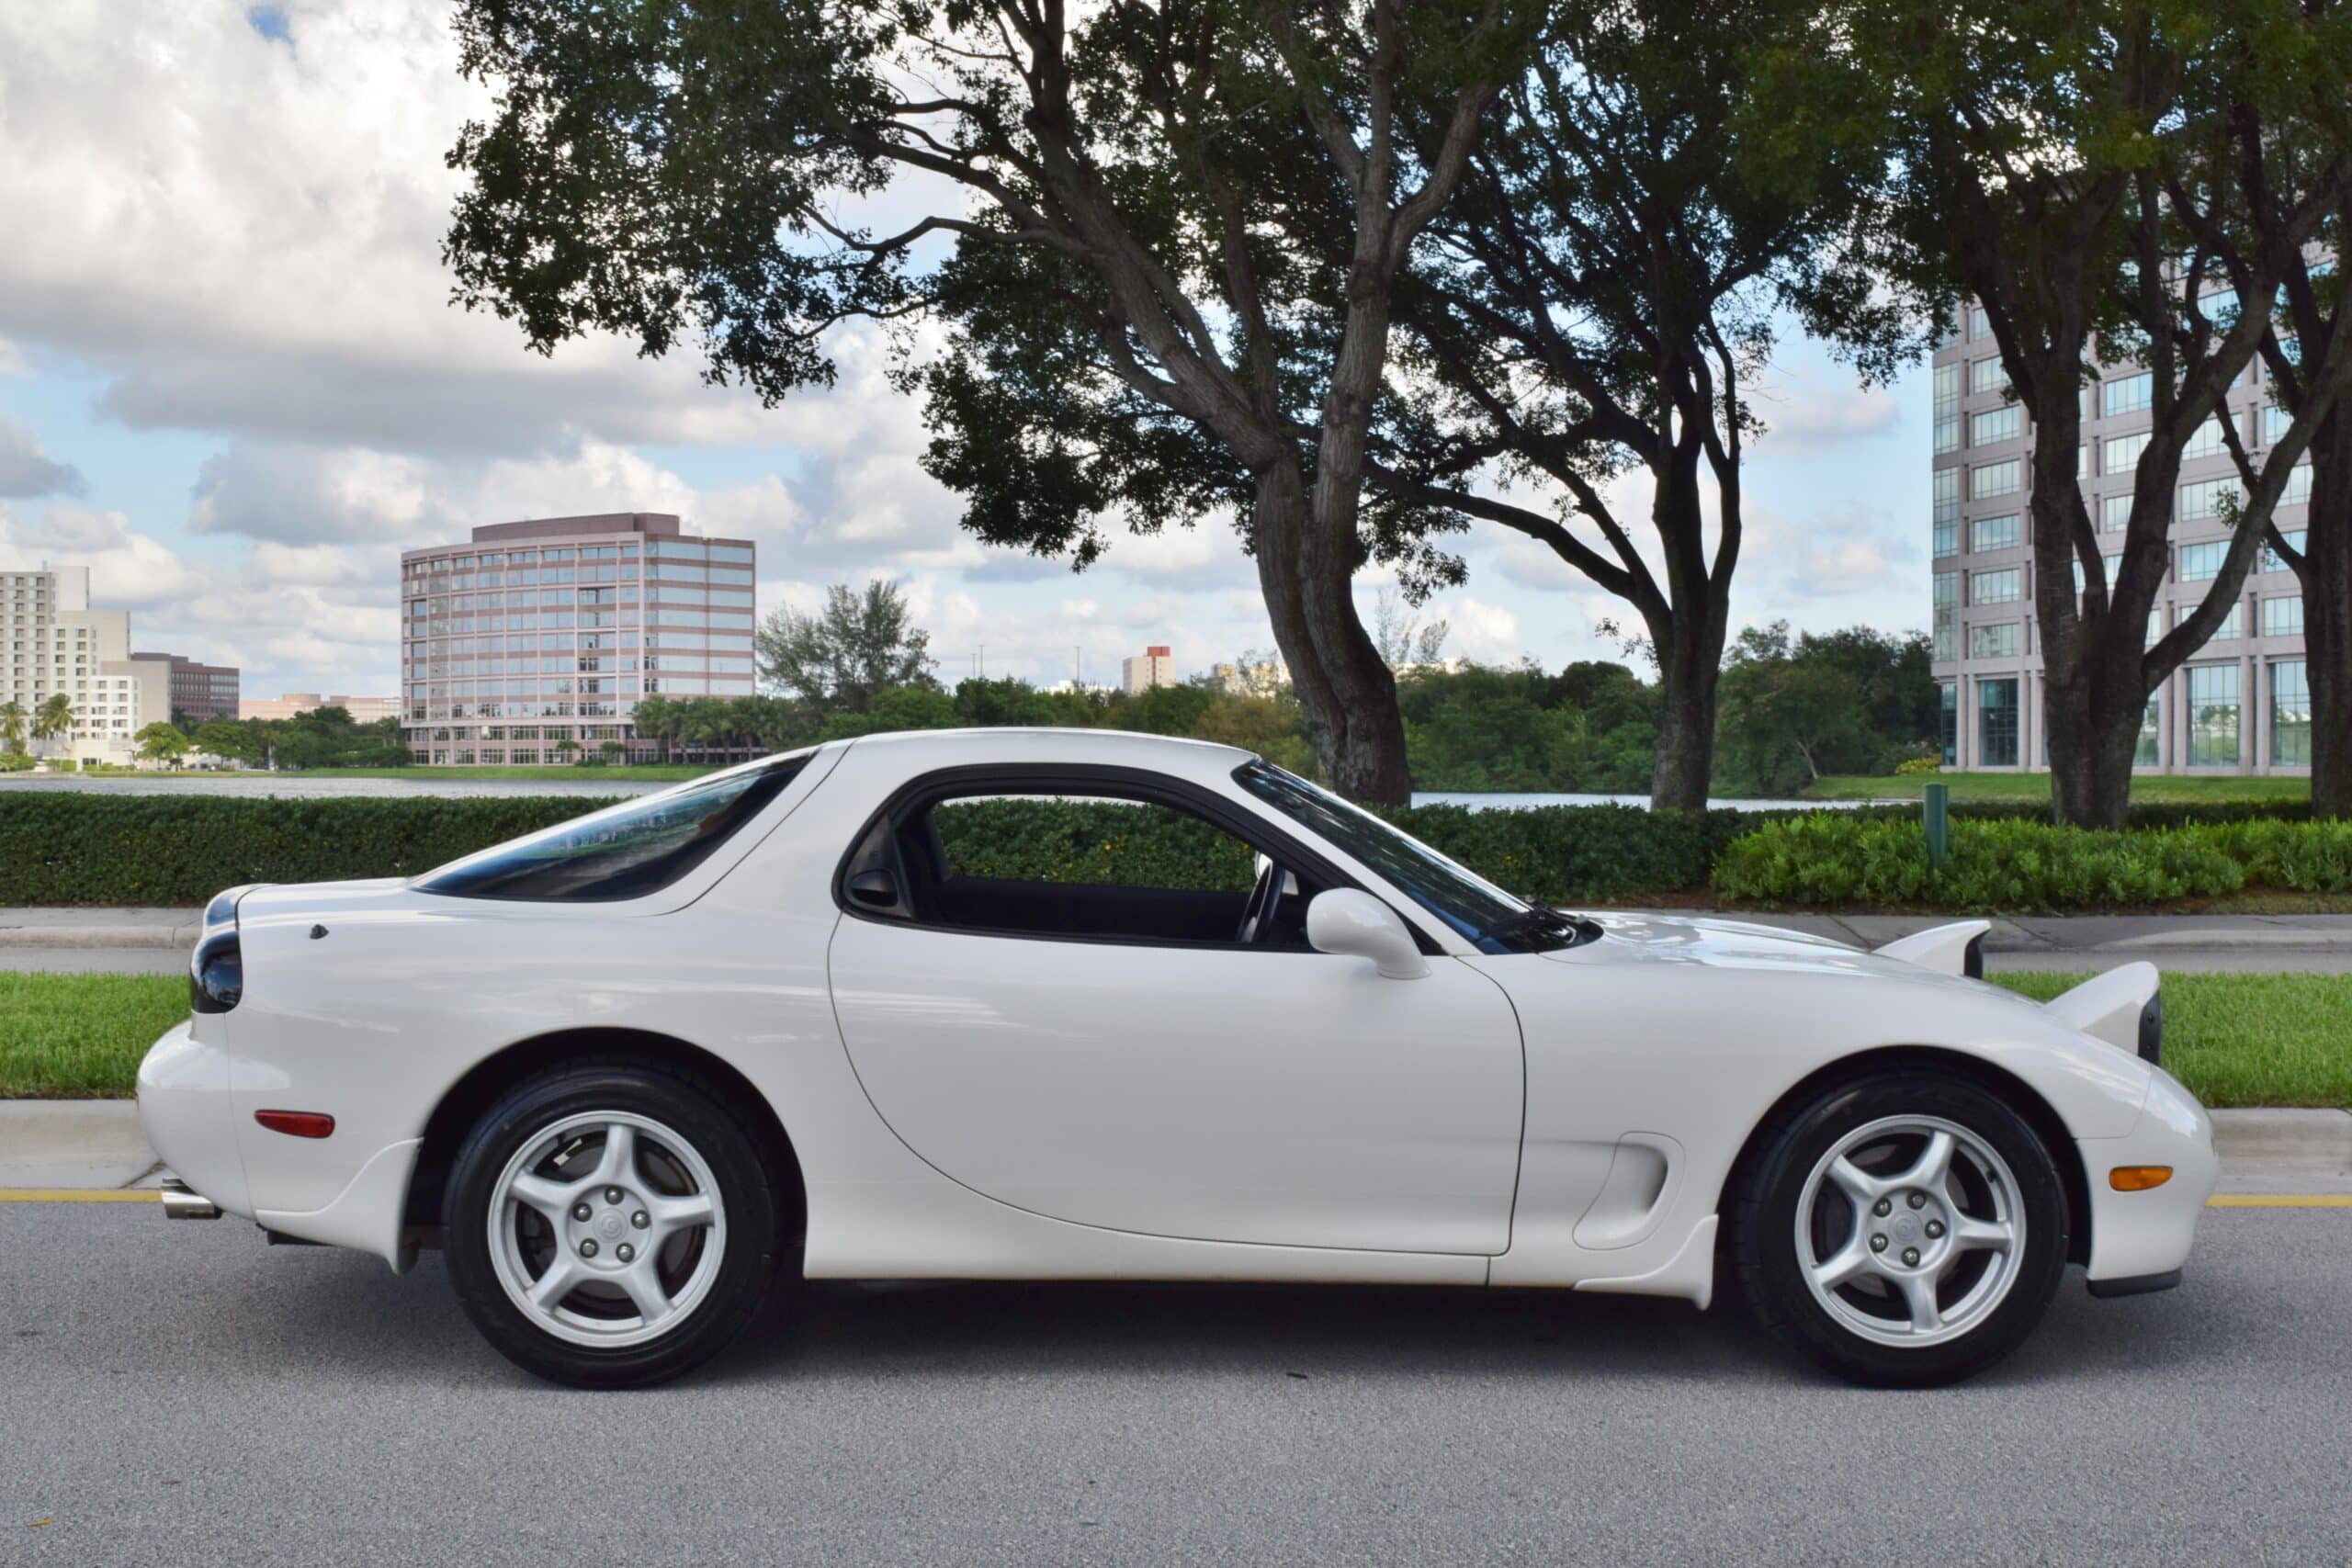 1994 Mazda RX-7 FD Turbo 100% Stock- Original Paint -ONLY 58K Miles – 1 of 26 USDM Chaste White SPEC Cars